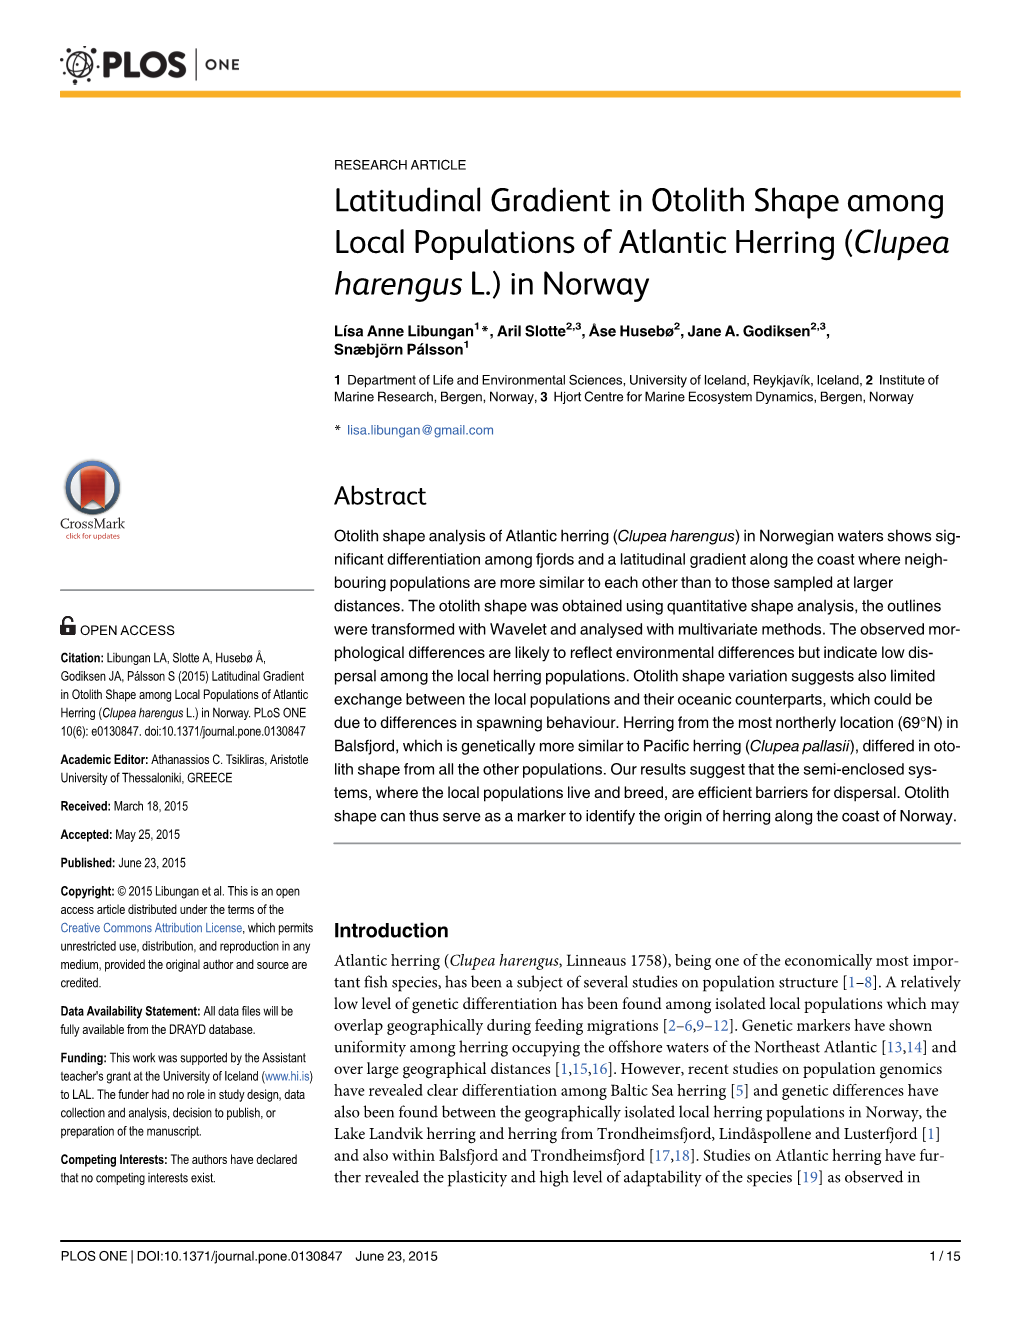 Latitudinal Gradient in Otolith Shape Among Local Populations of Atlantic Herring (Clupea Harengus L.) in Norway